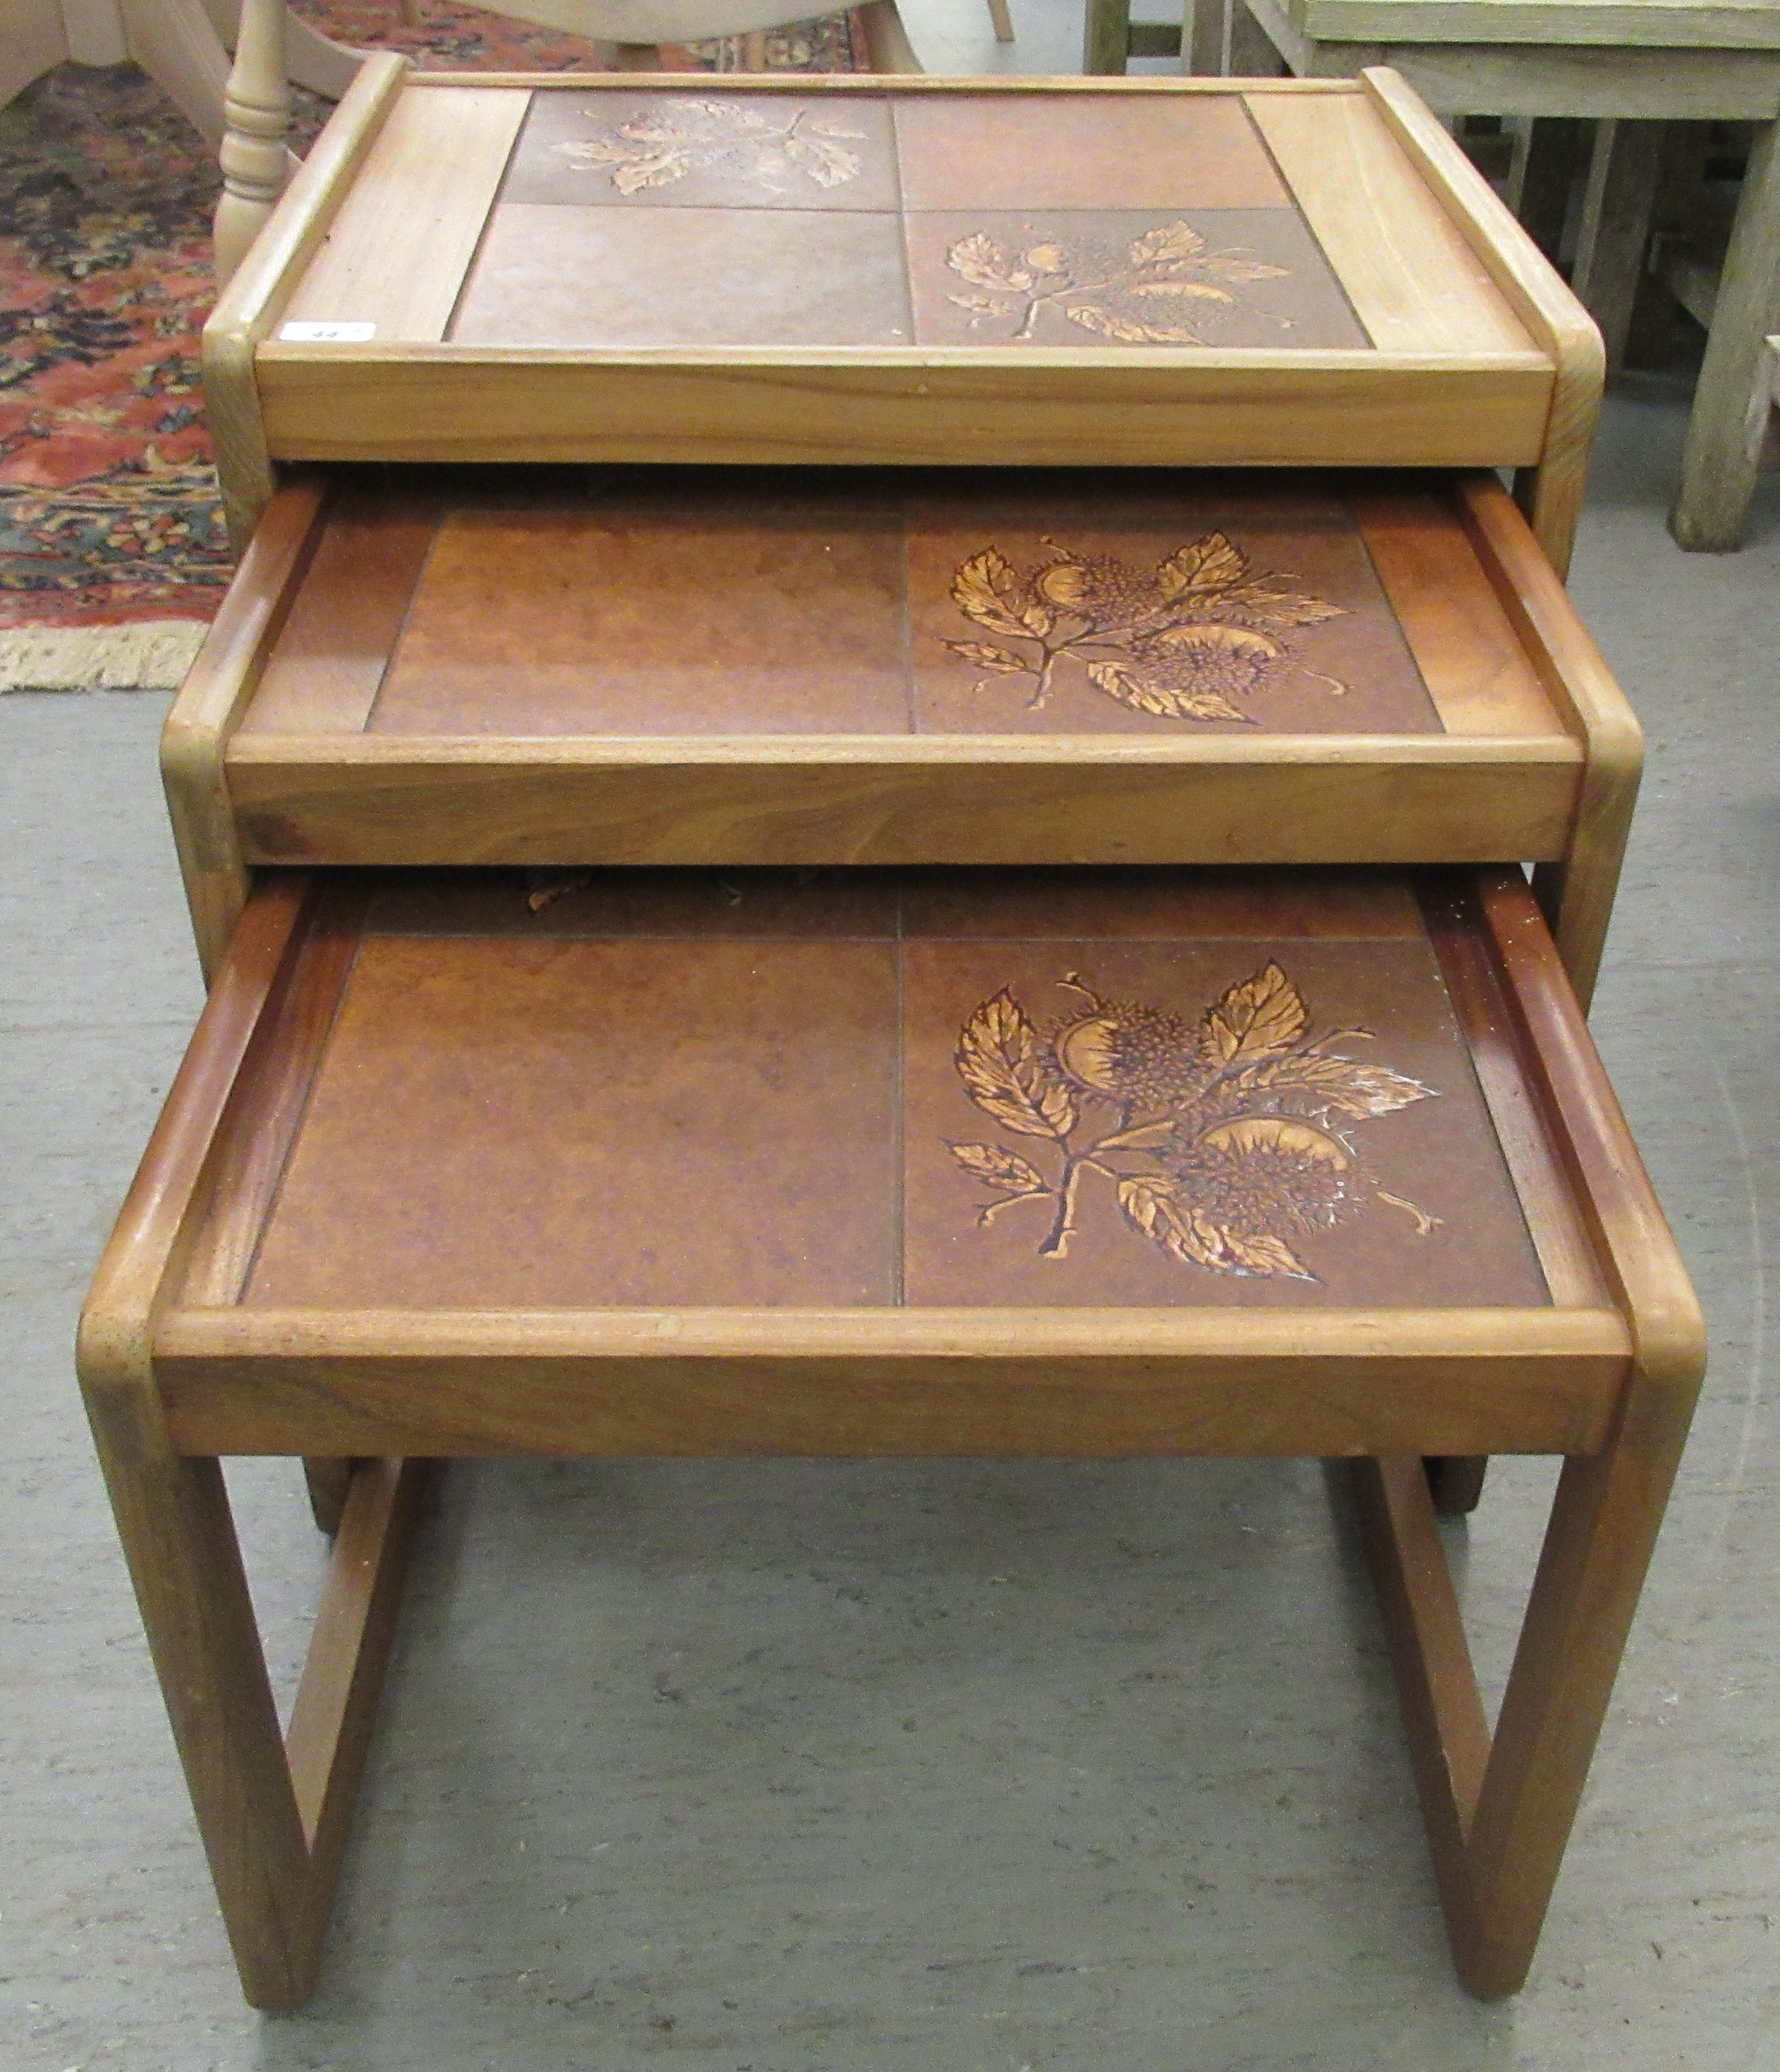 A nesting set of three modern teak framed tile top occasional tables, raised on block legs